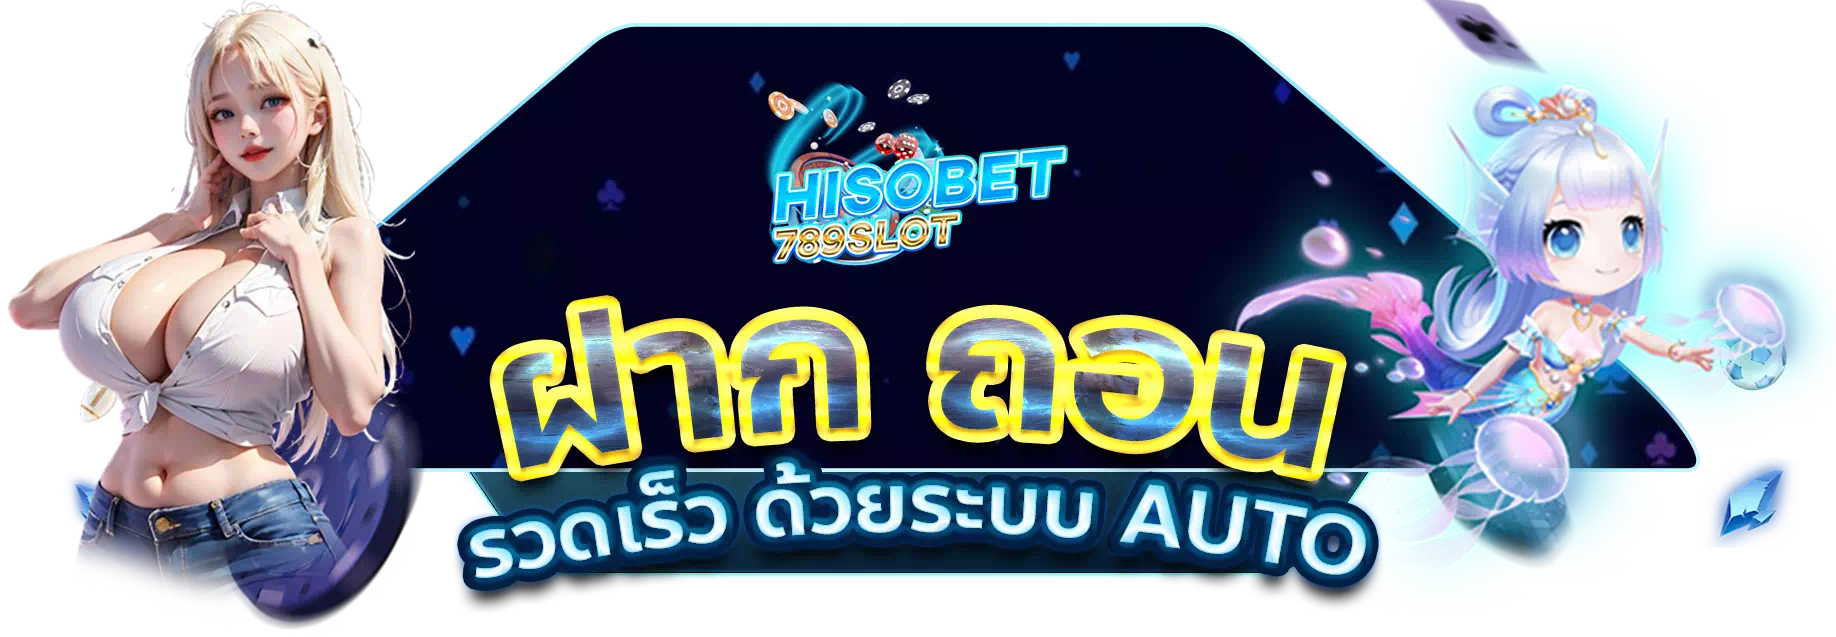 hisobet789-slot